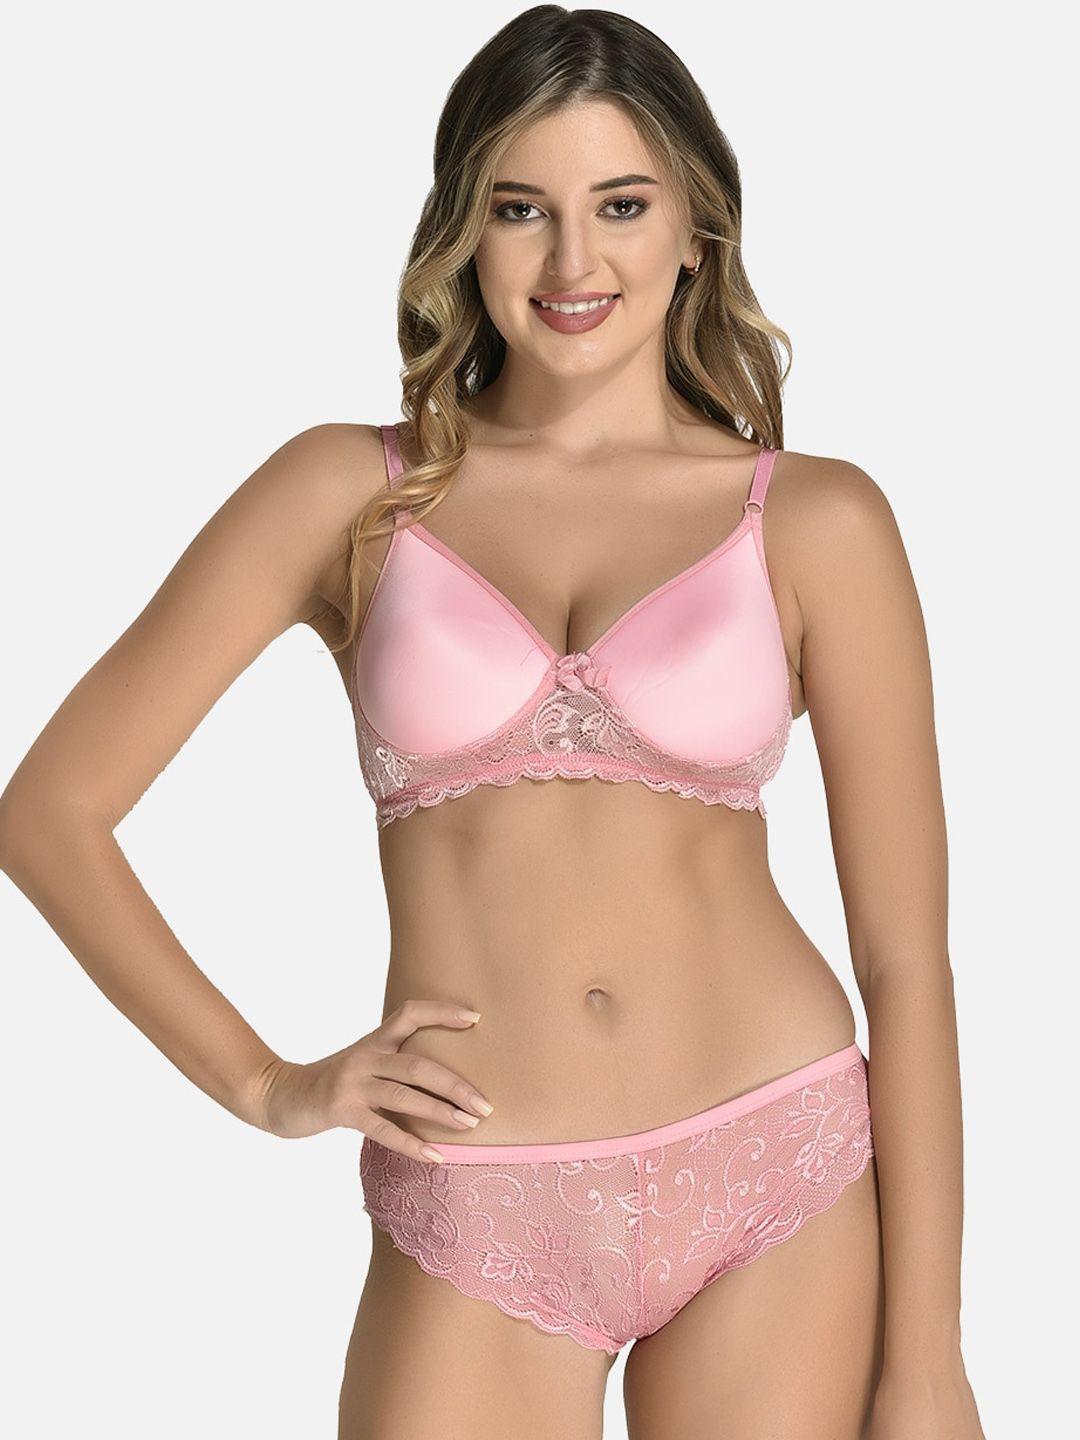 styfun self-designed lingerie set ls_jas_min_set_pink_b